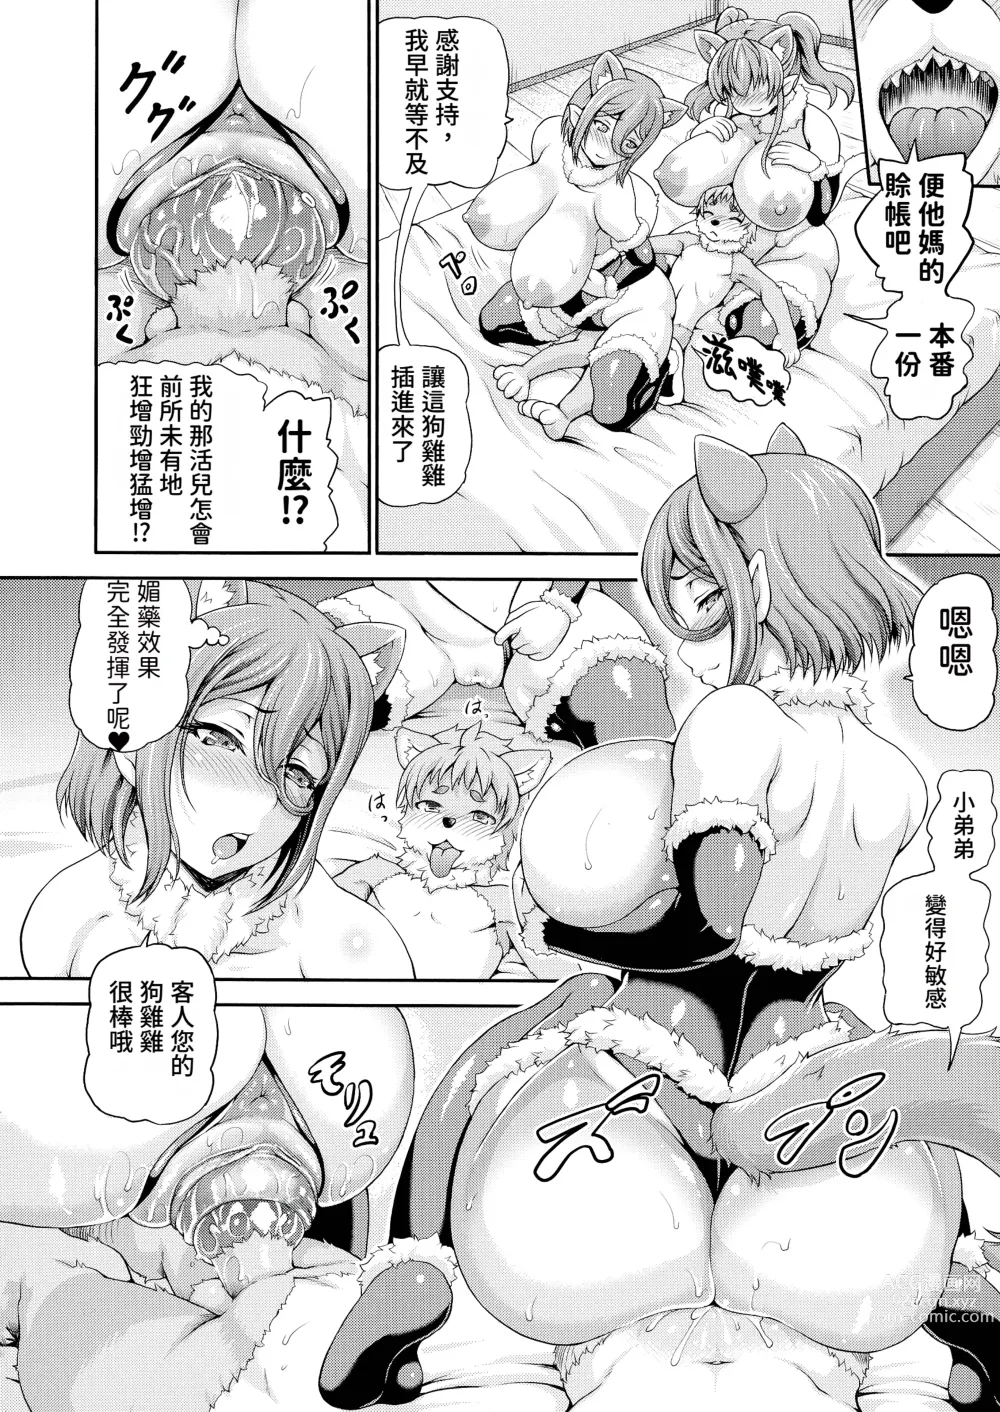 Page 140 of manga Isekai Shoukan 2 Ch. 1-4, 6-8